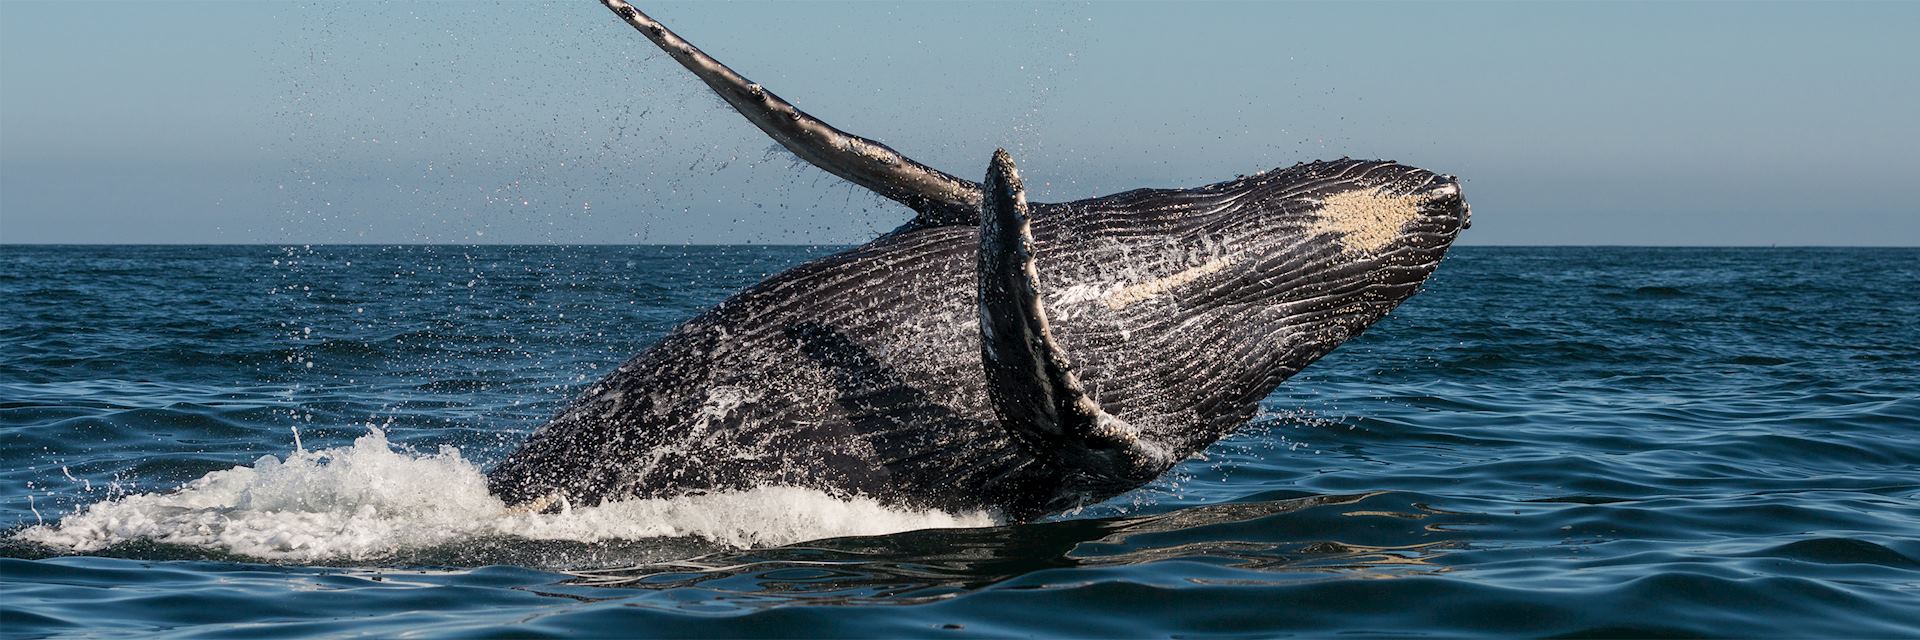 Humpback whale, Vancouver Island